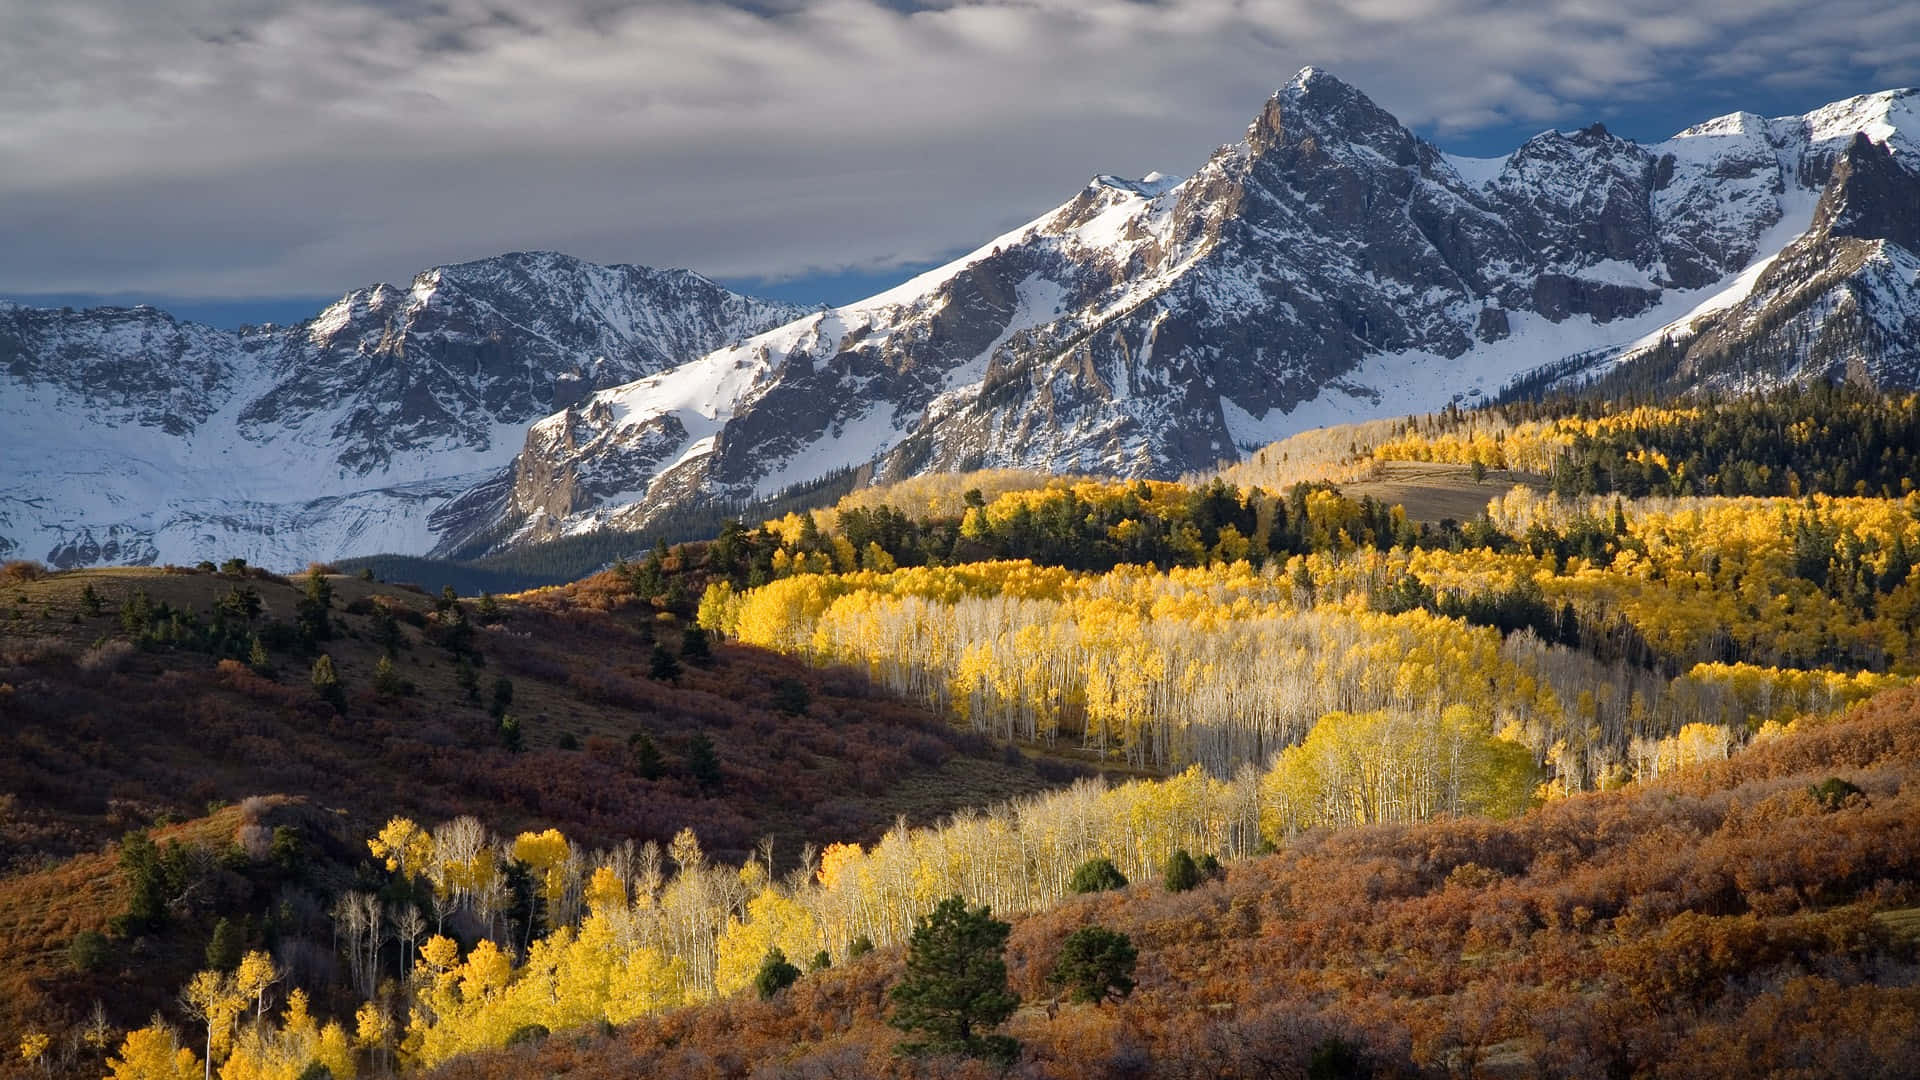 Impresionantepaisaje De Las Majestuosas Montañas De Colorado